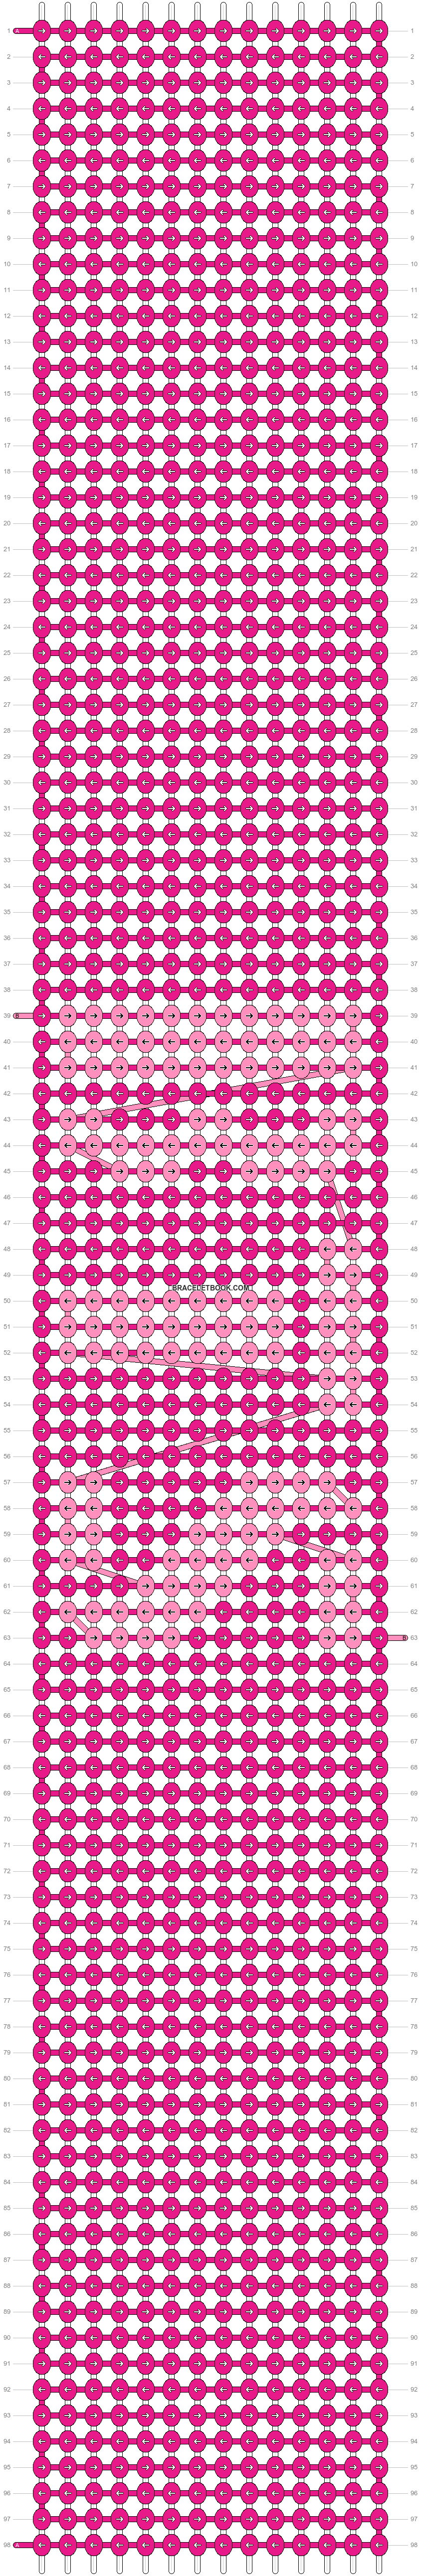 Alpha pattern #21589 variation #15228 pattern